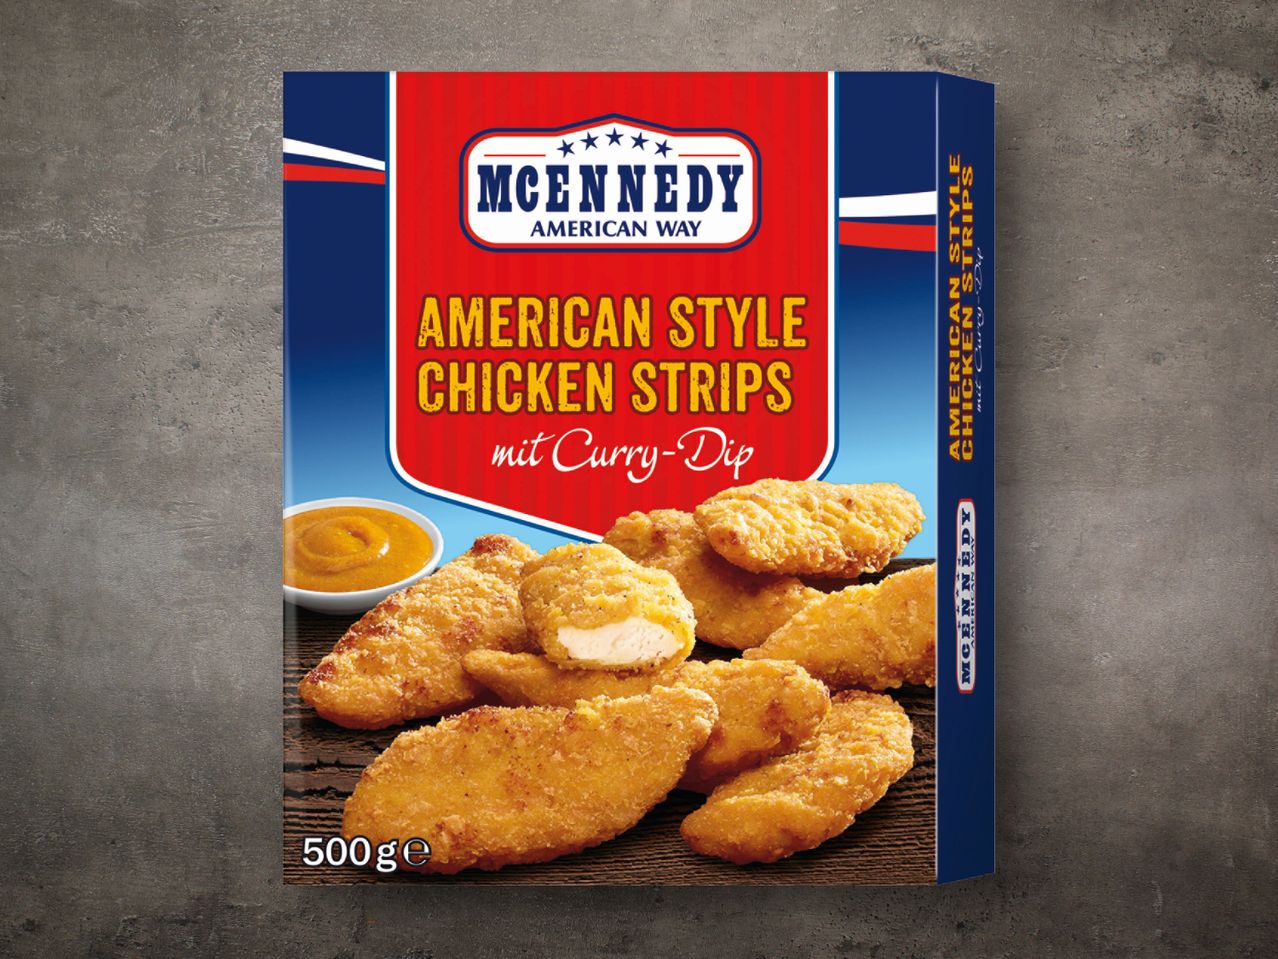 McEnnedy American Style Chicken Strips